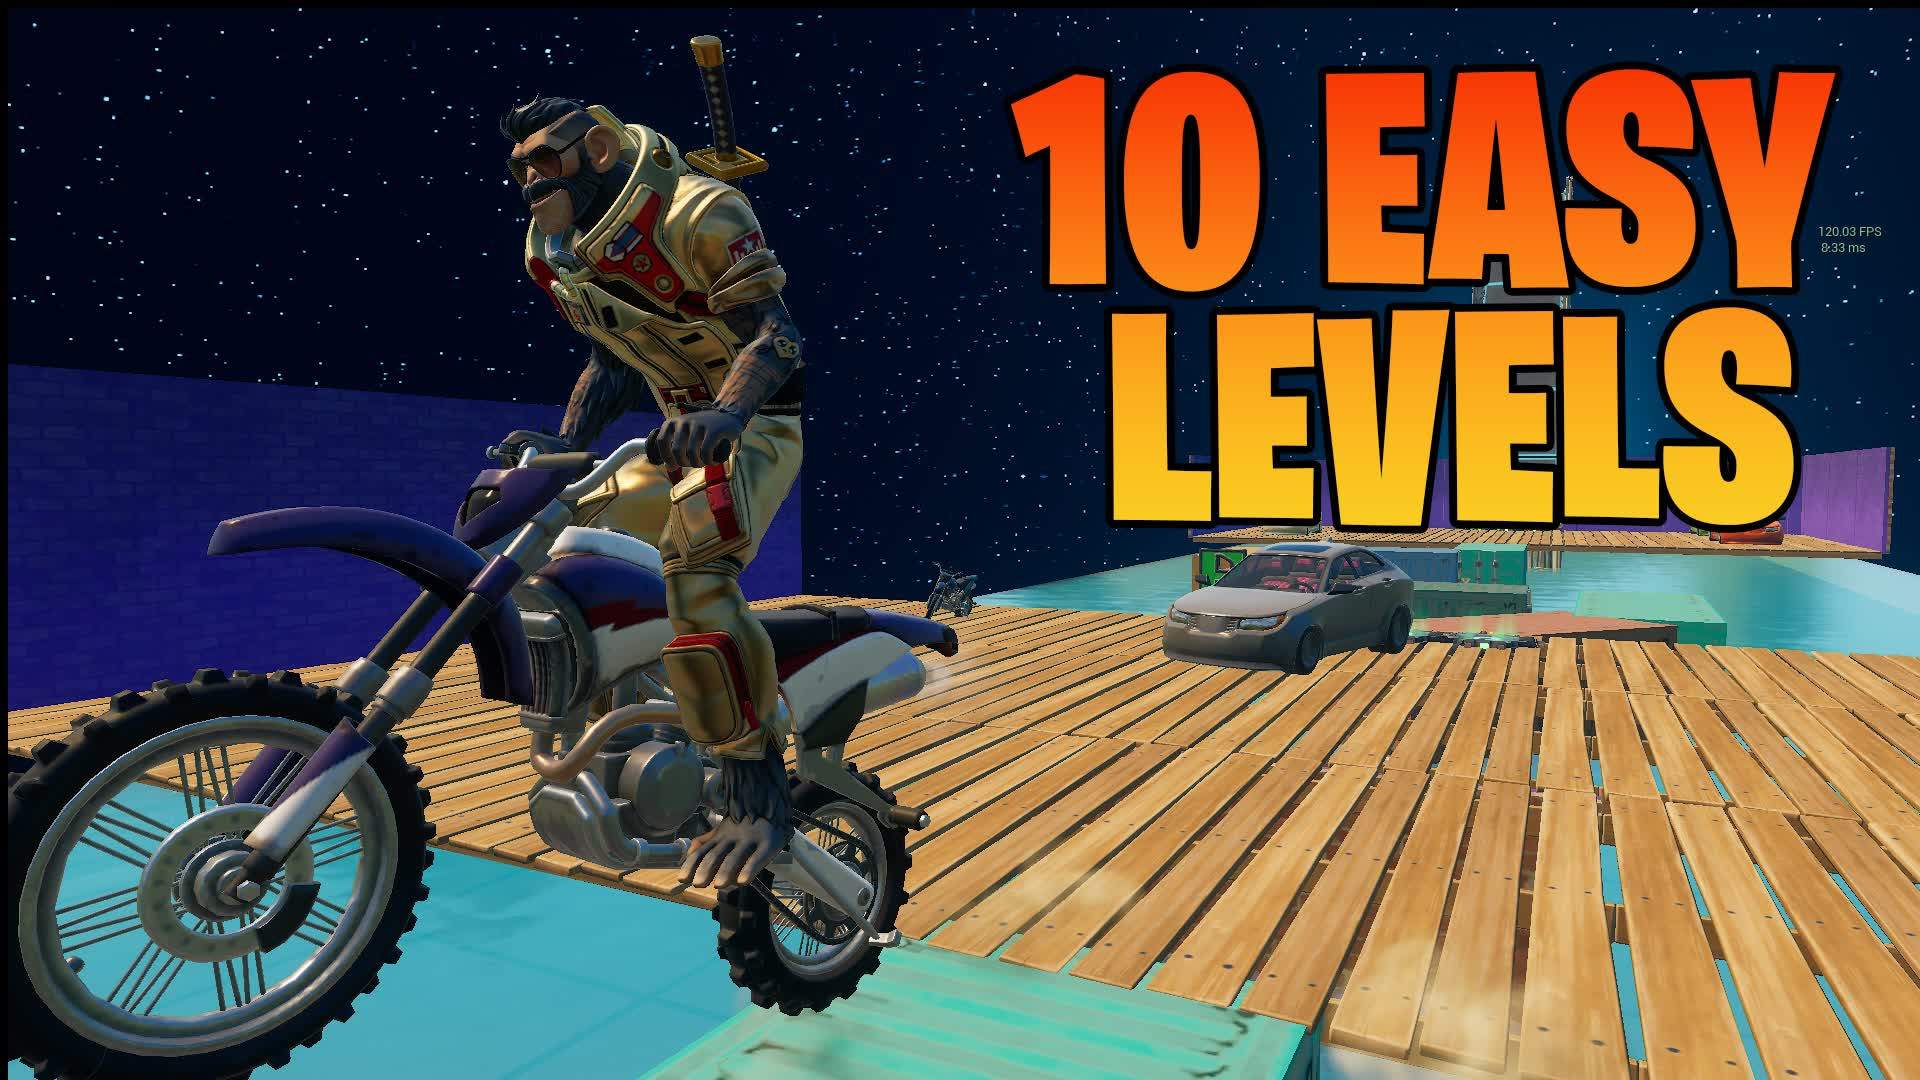 Easy 10 Levels Deathrun!